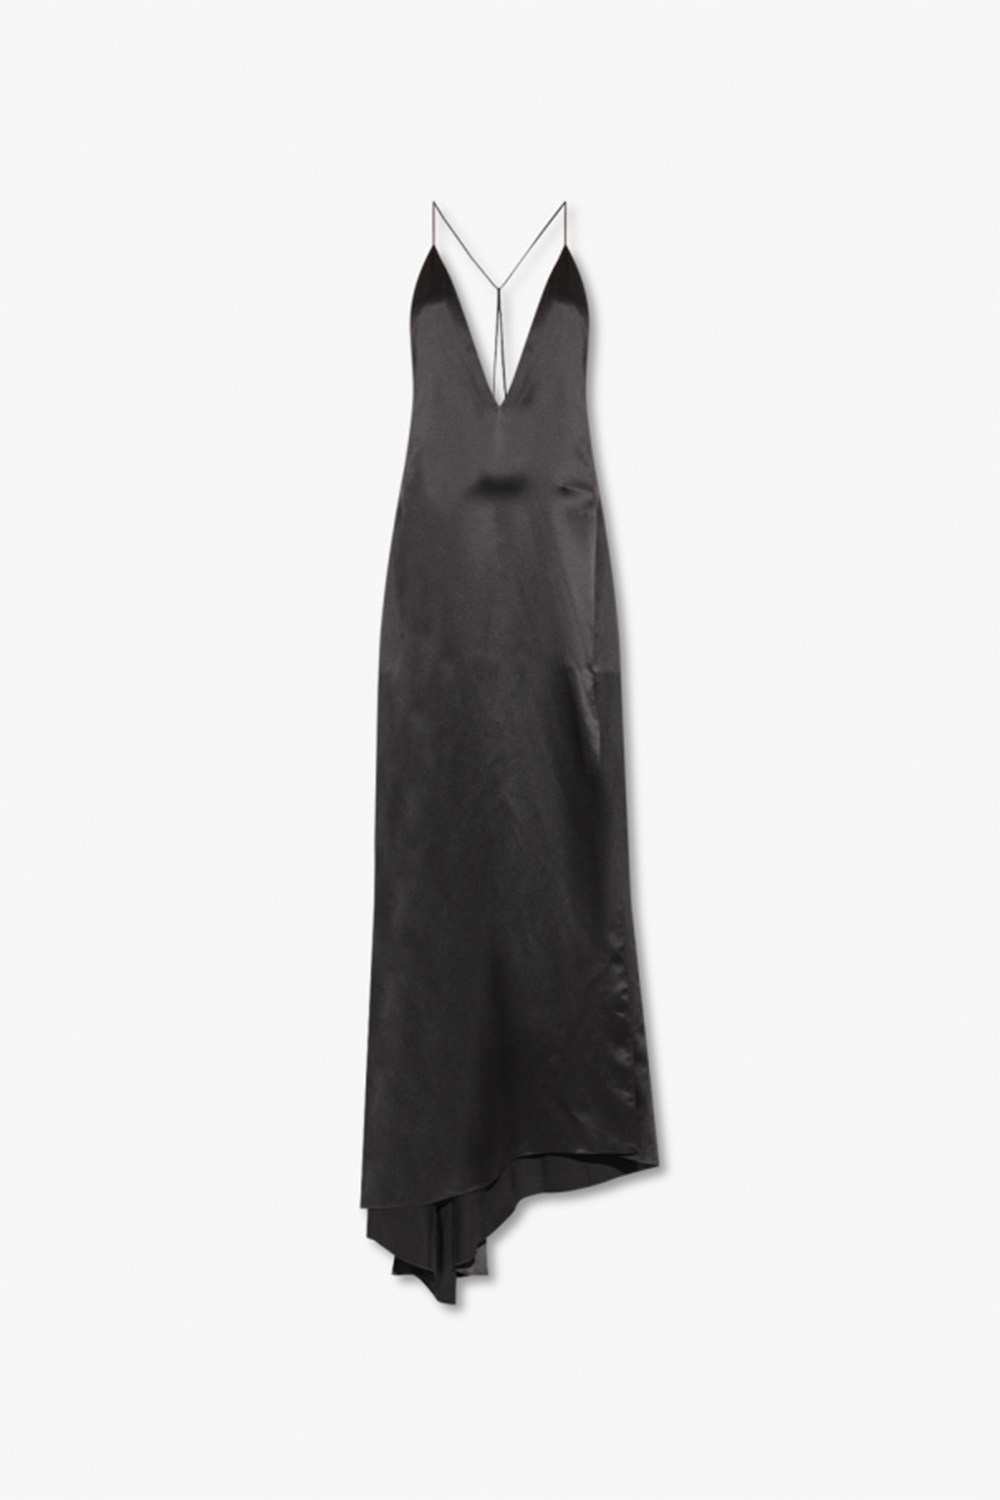 Saint Laurent saint laurent black embellished dress